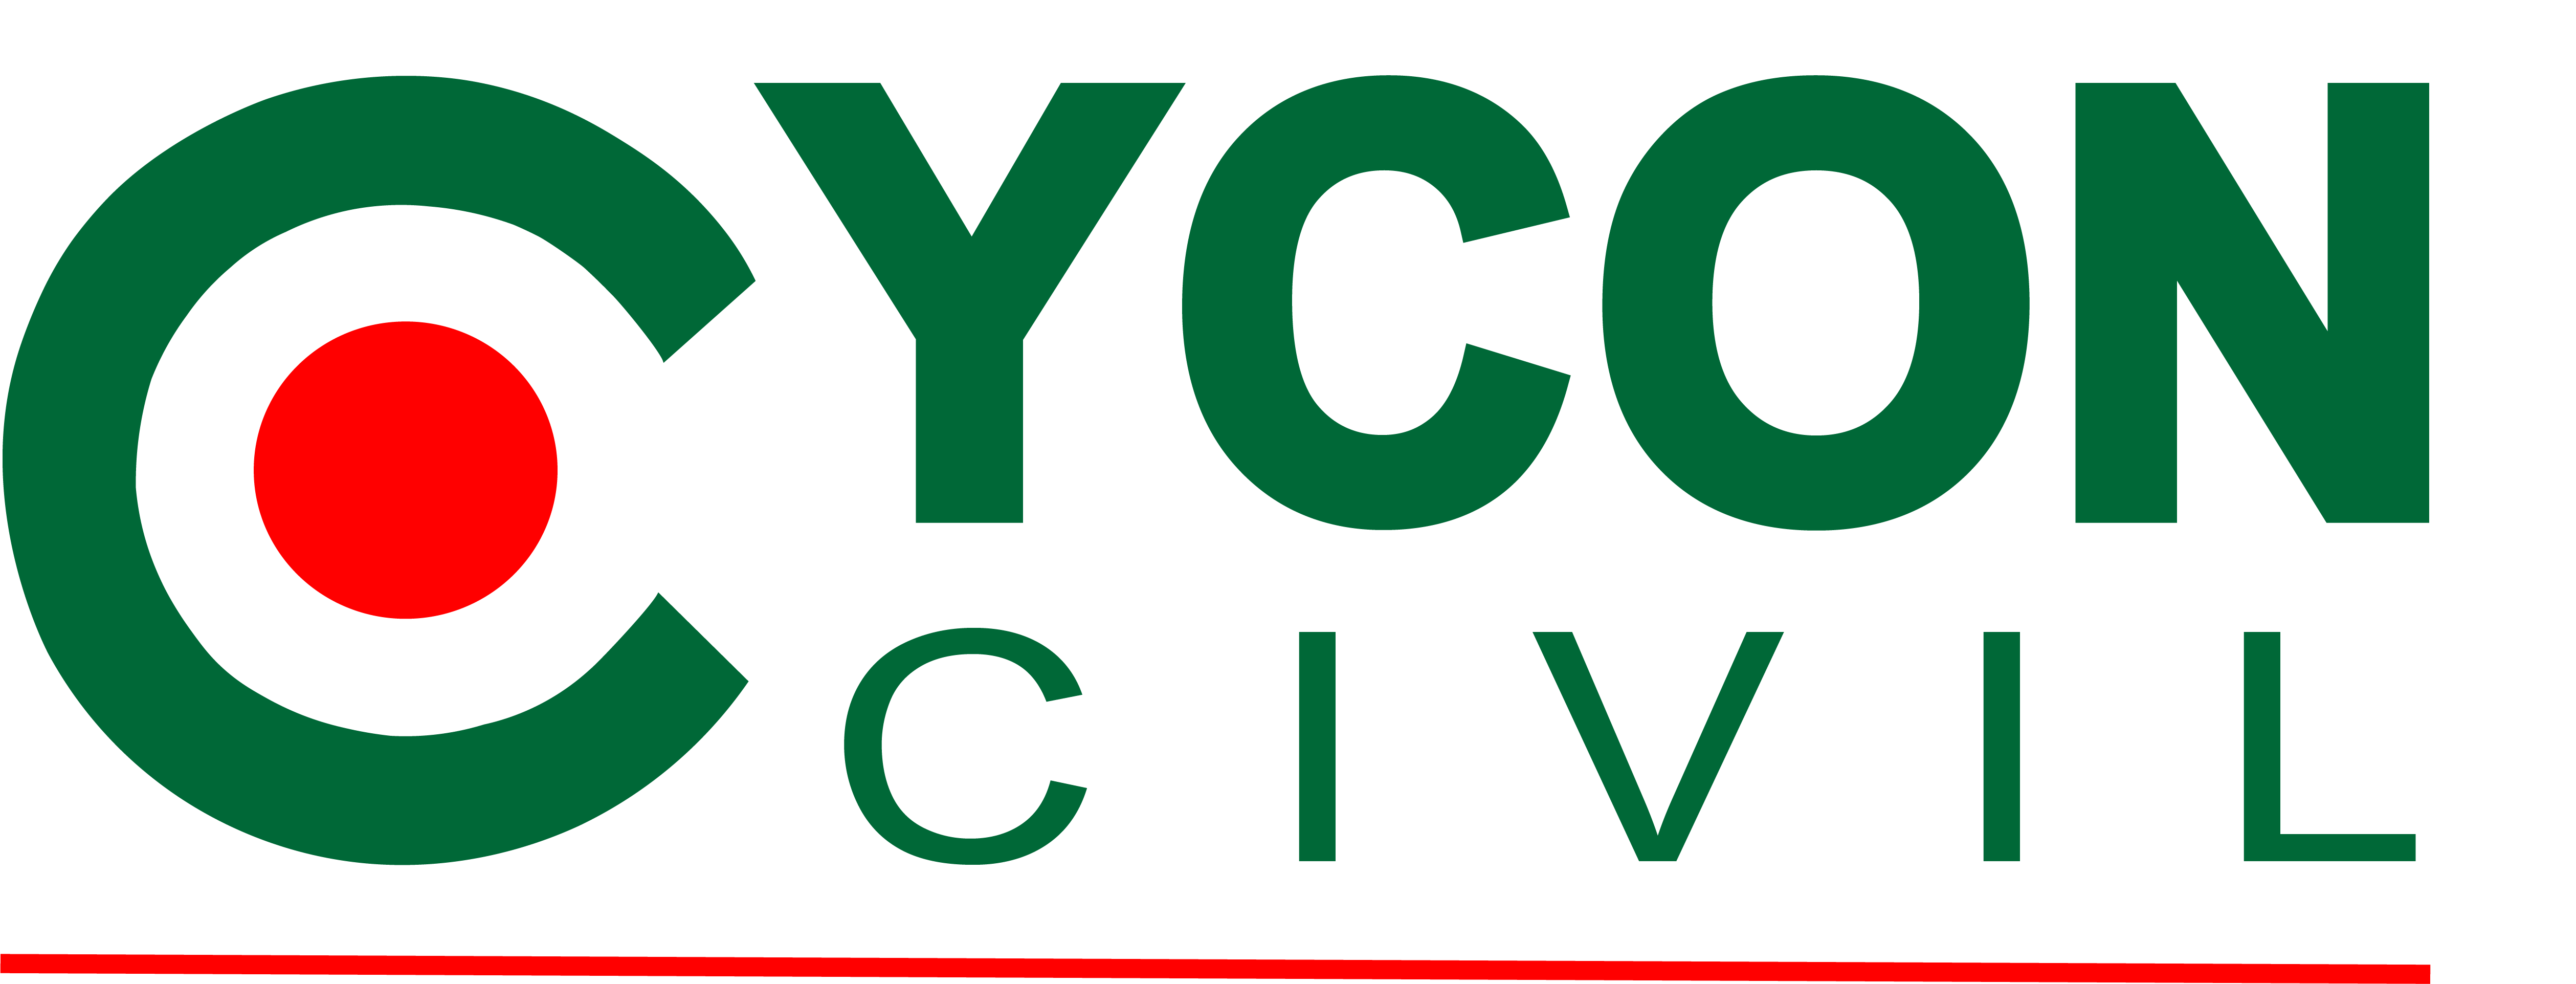 Cycon Logo Full